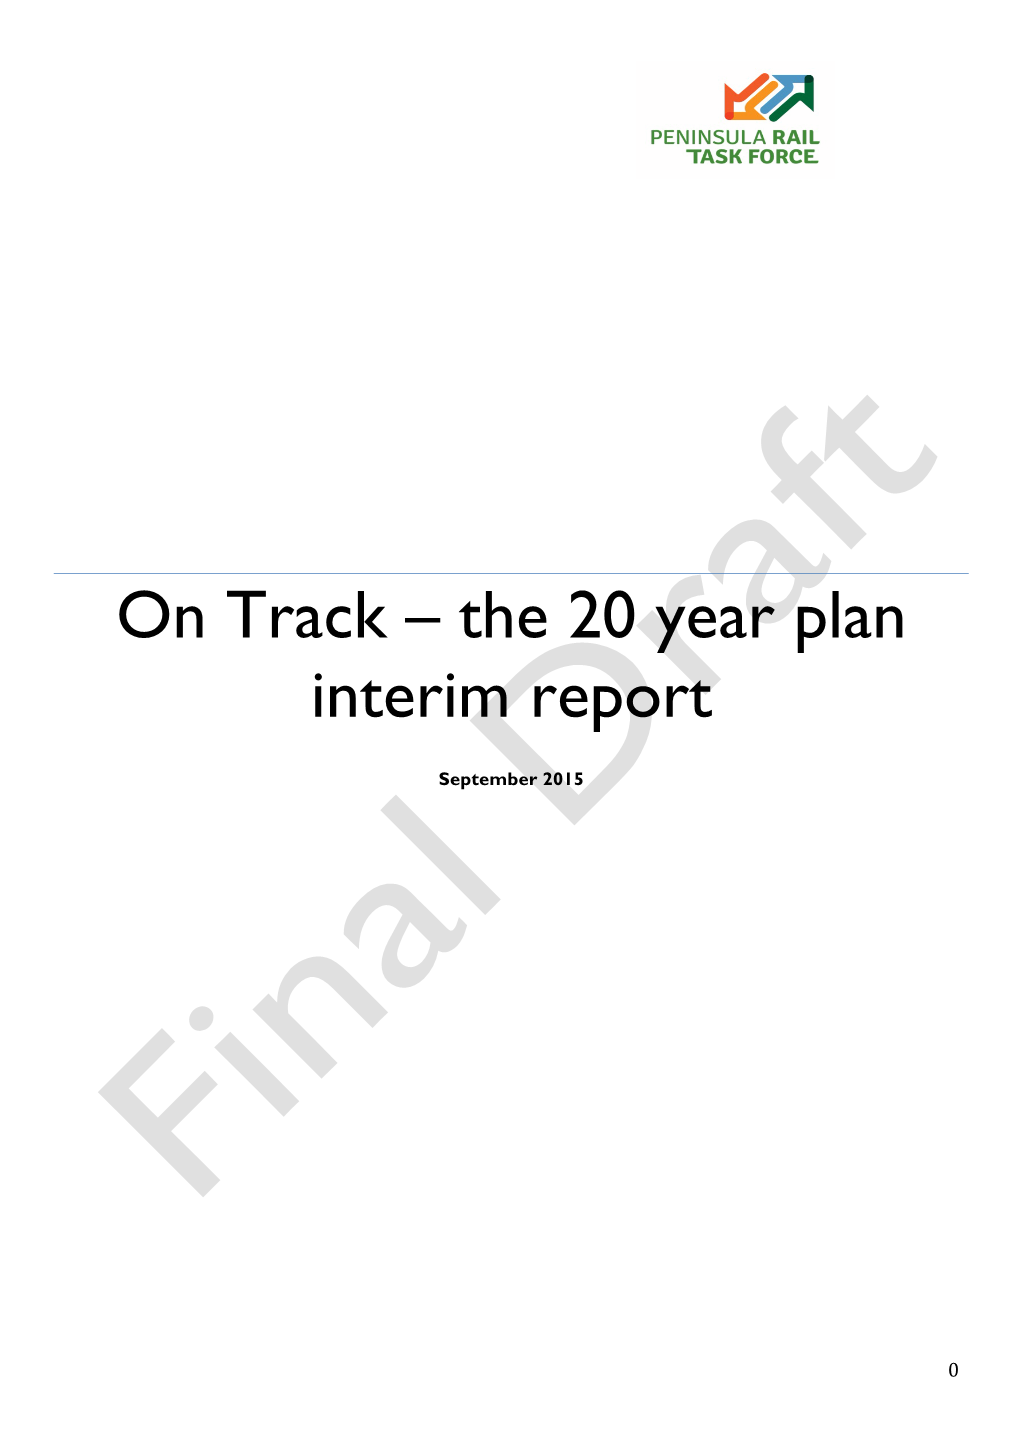 The 20 Year Plan Interim Report